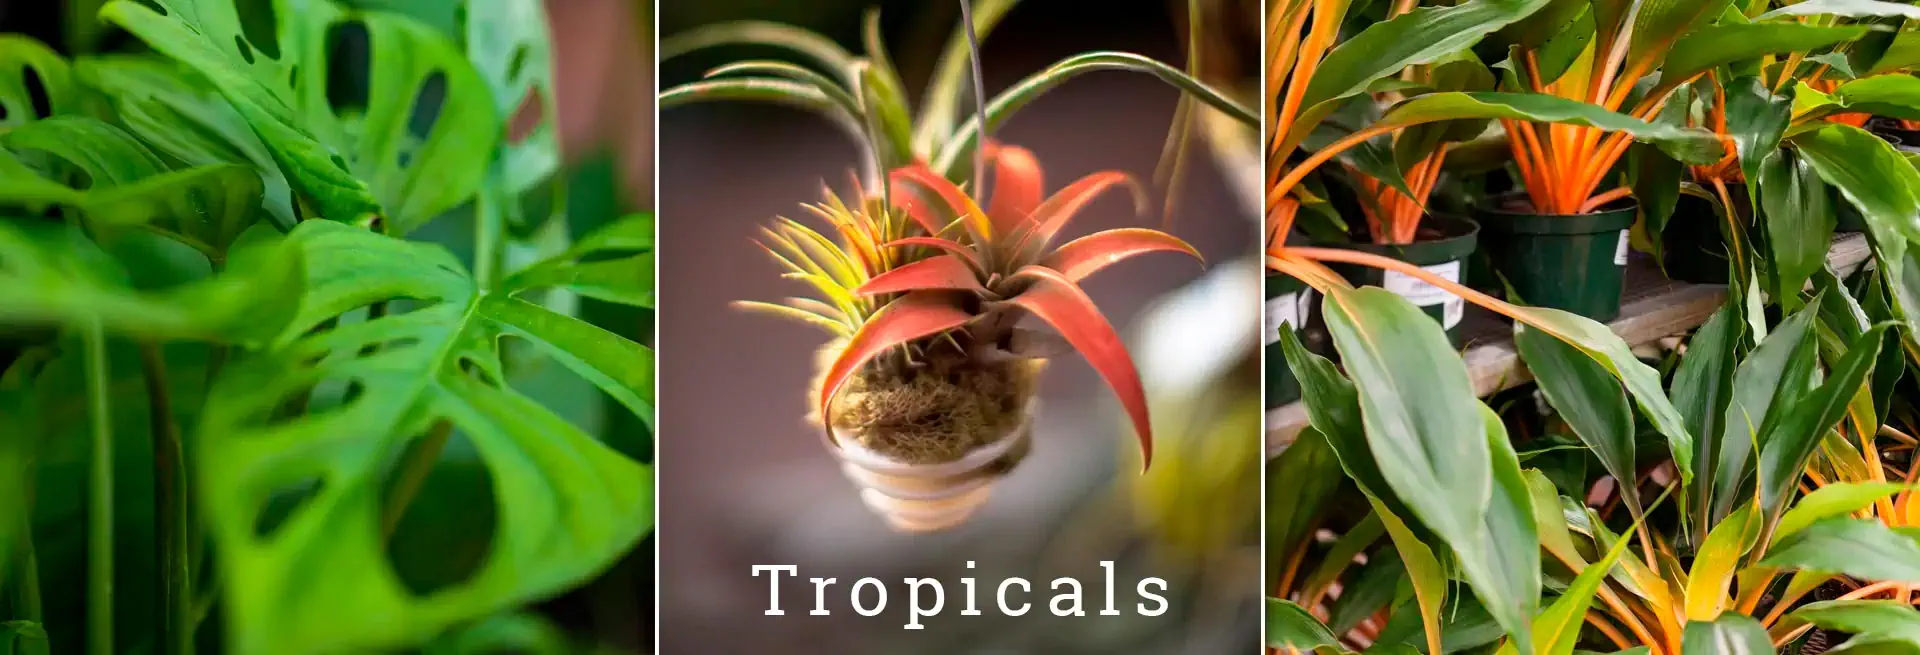 greengate Tropical Plants